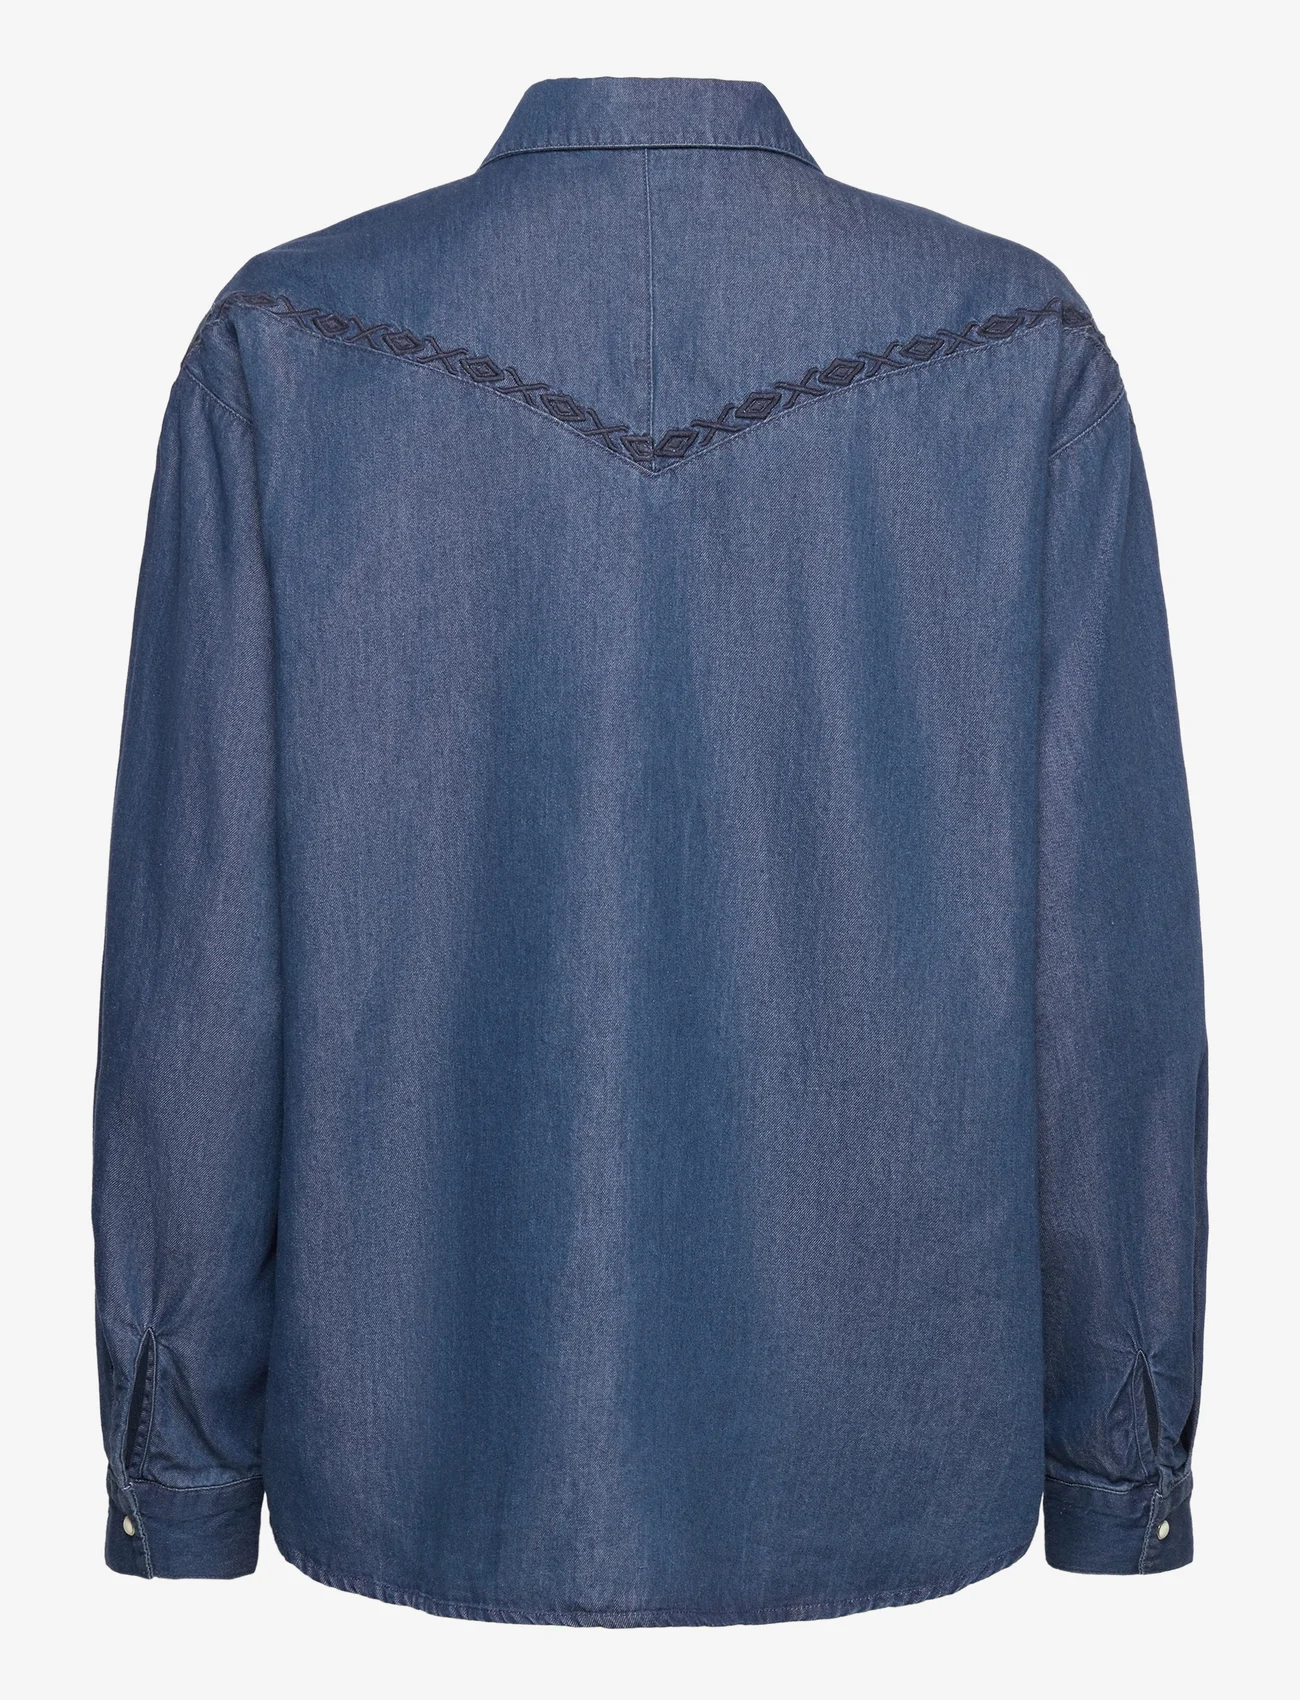 Object - OBJJOANNA L/S DENIM SHIRT 130 - langærmede skjorter - medium blue denim - 1